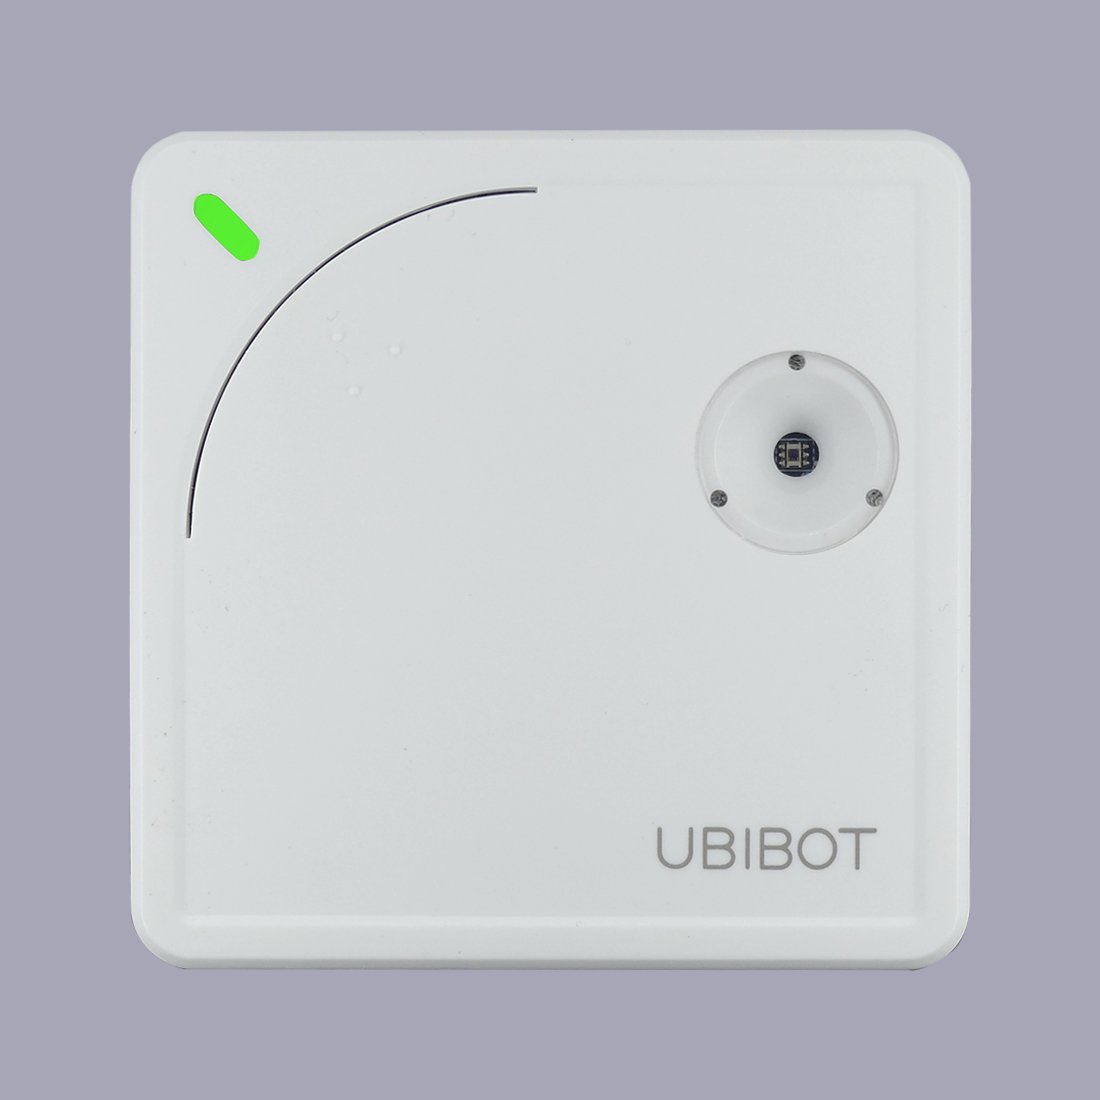 UbiBot WS1 Wireless Smart Temperature Humidity Monitor